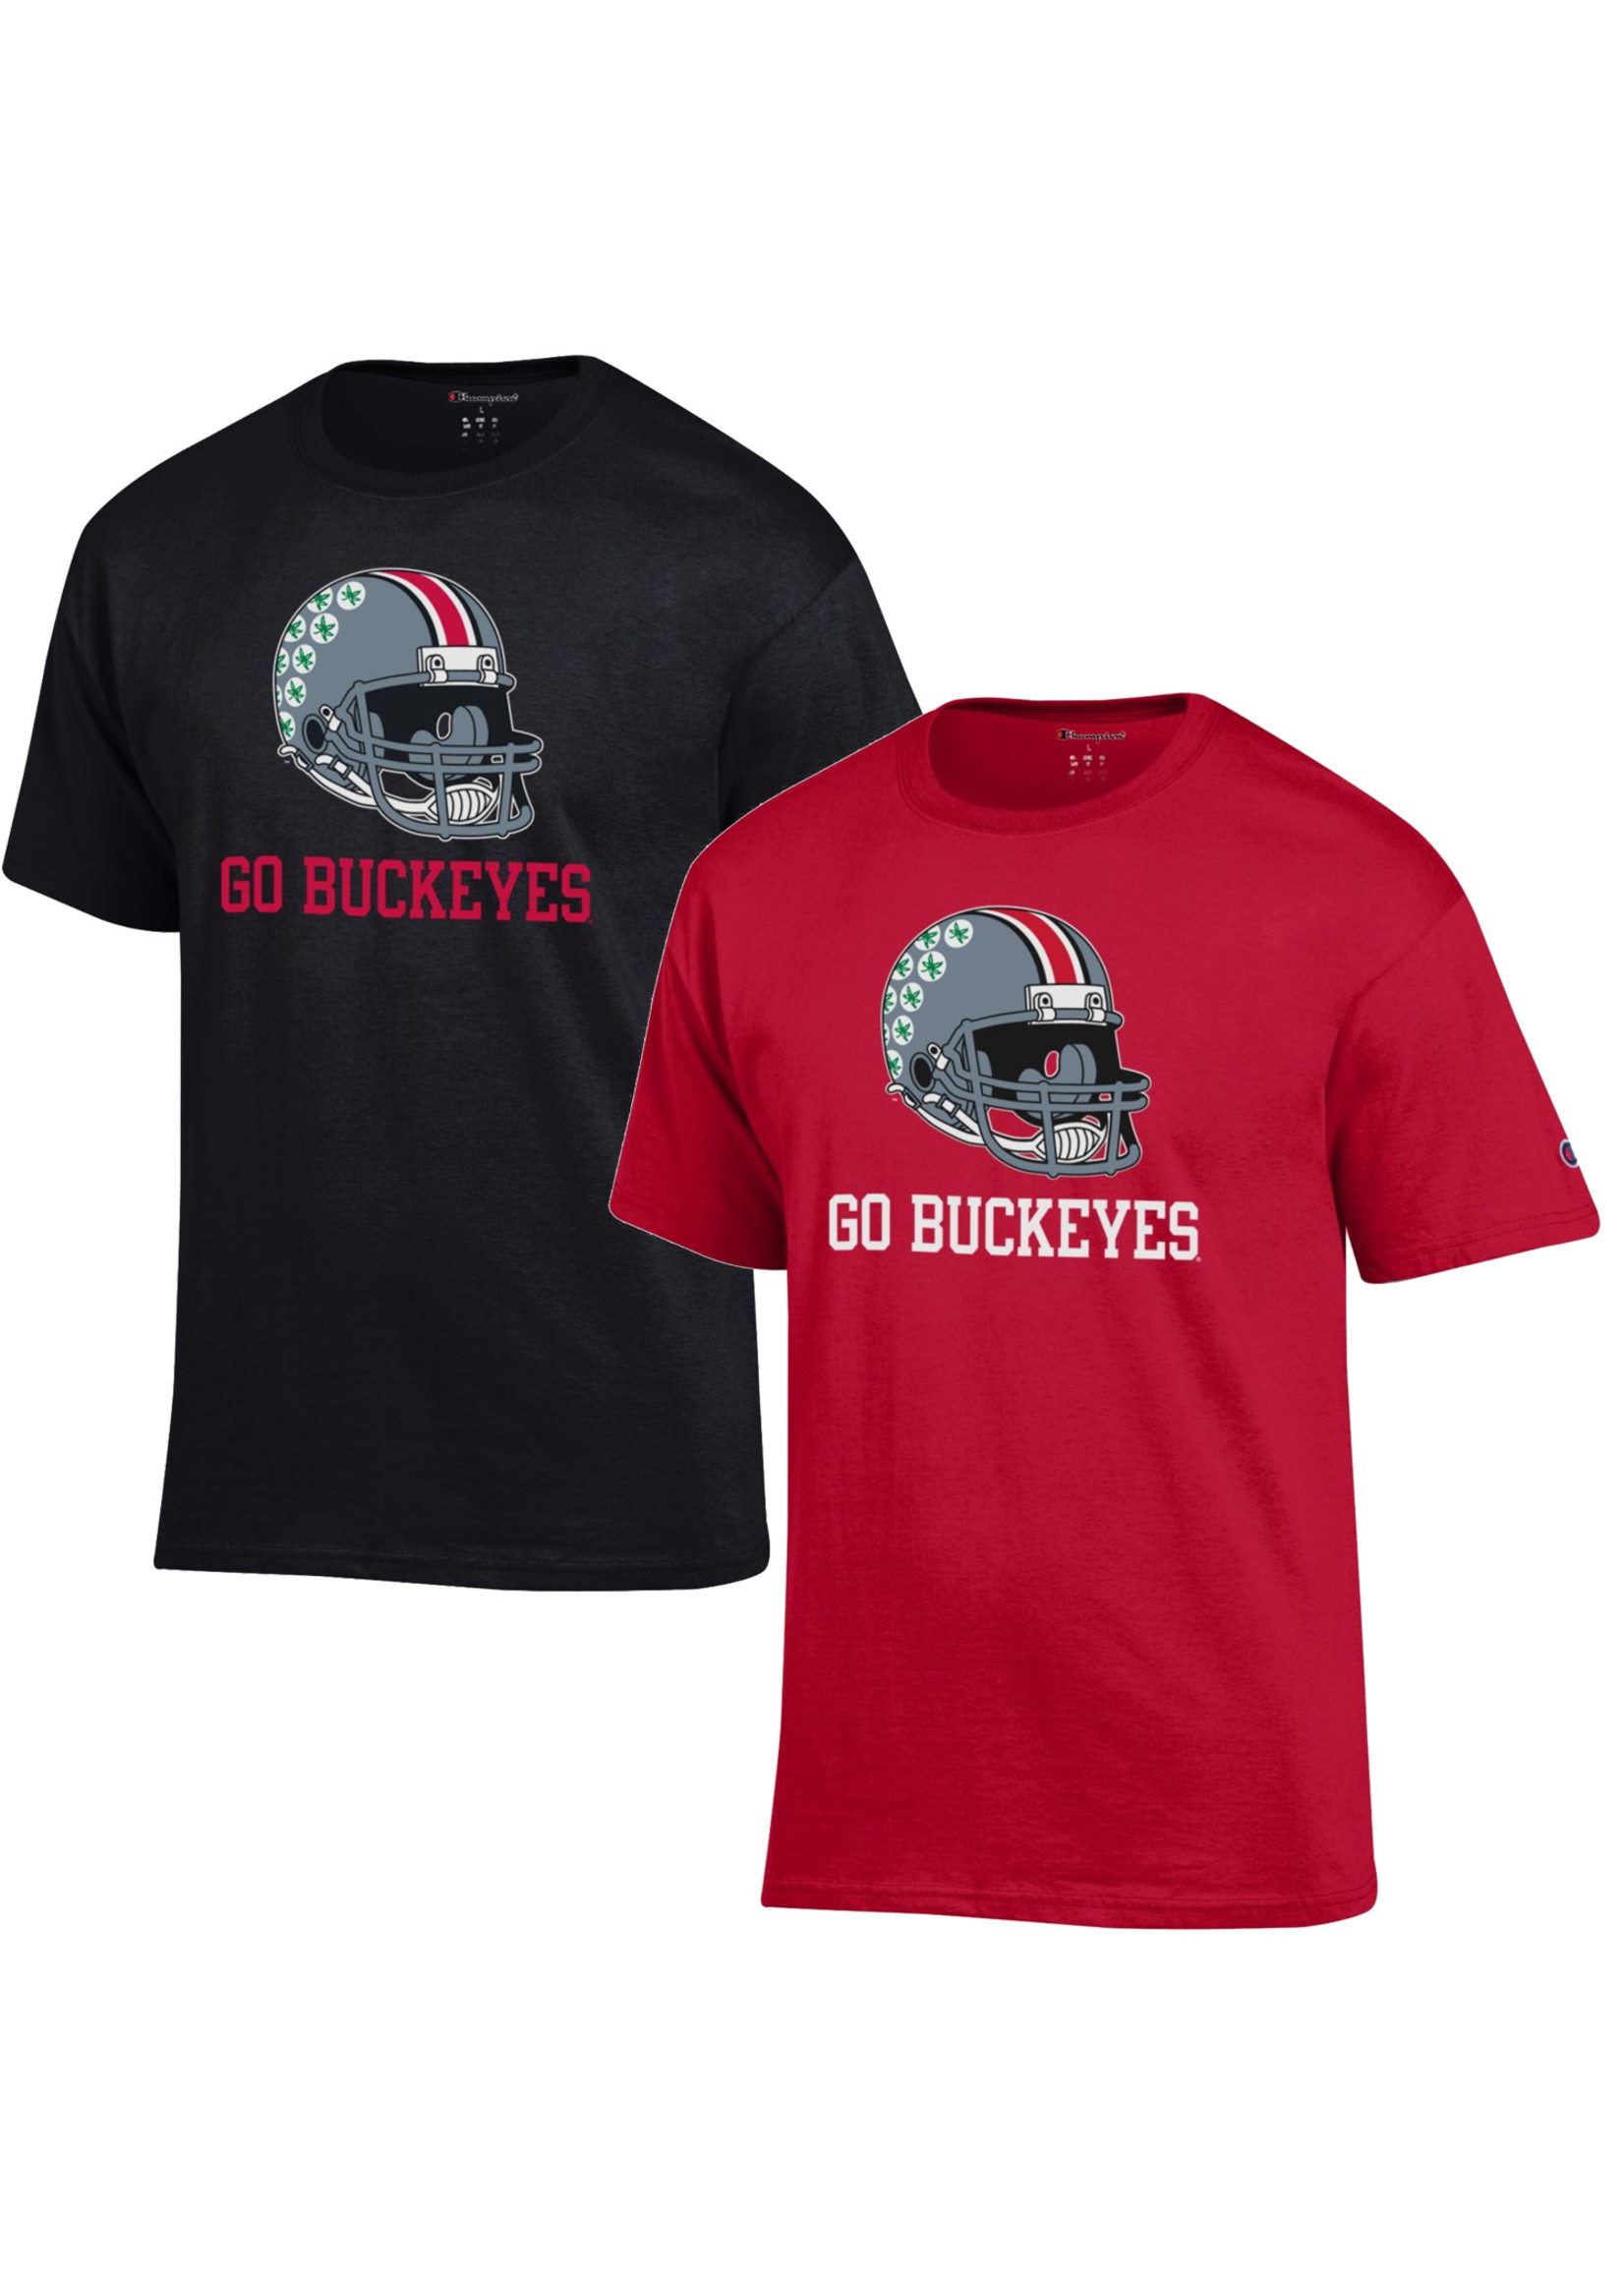 Champion Ohio State Buckeyes "Go Buckeyes" Helmet Tee